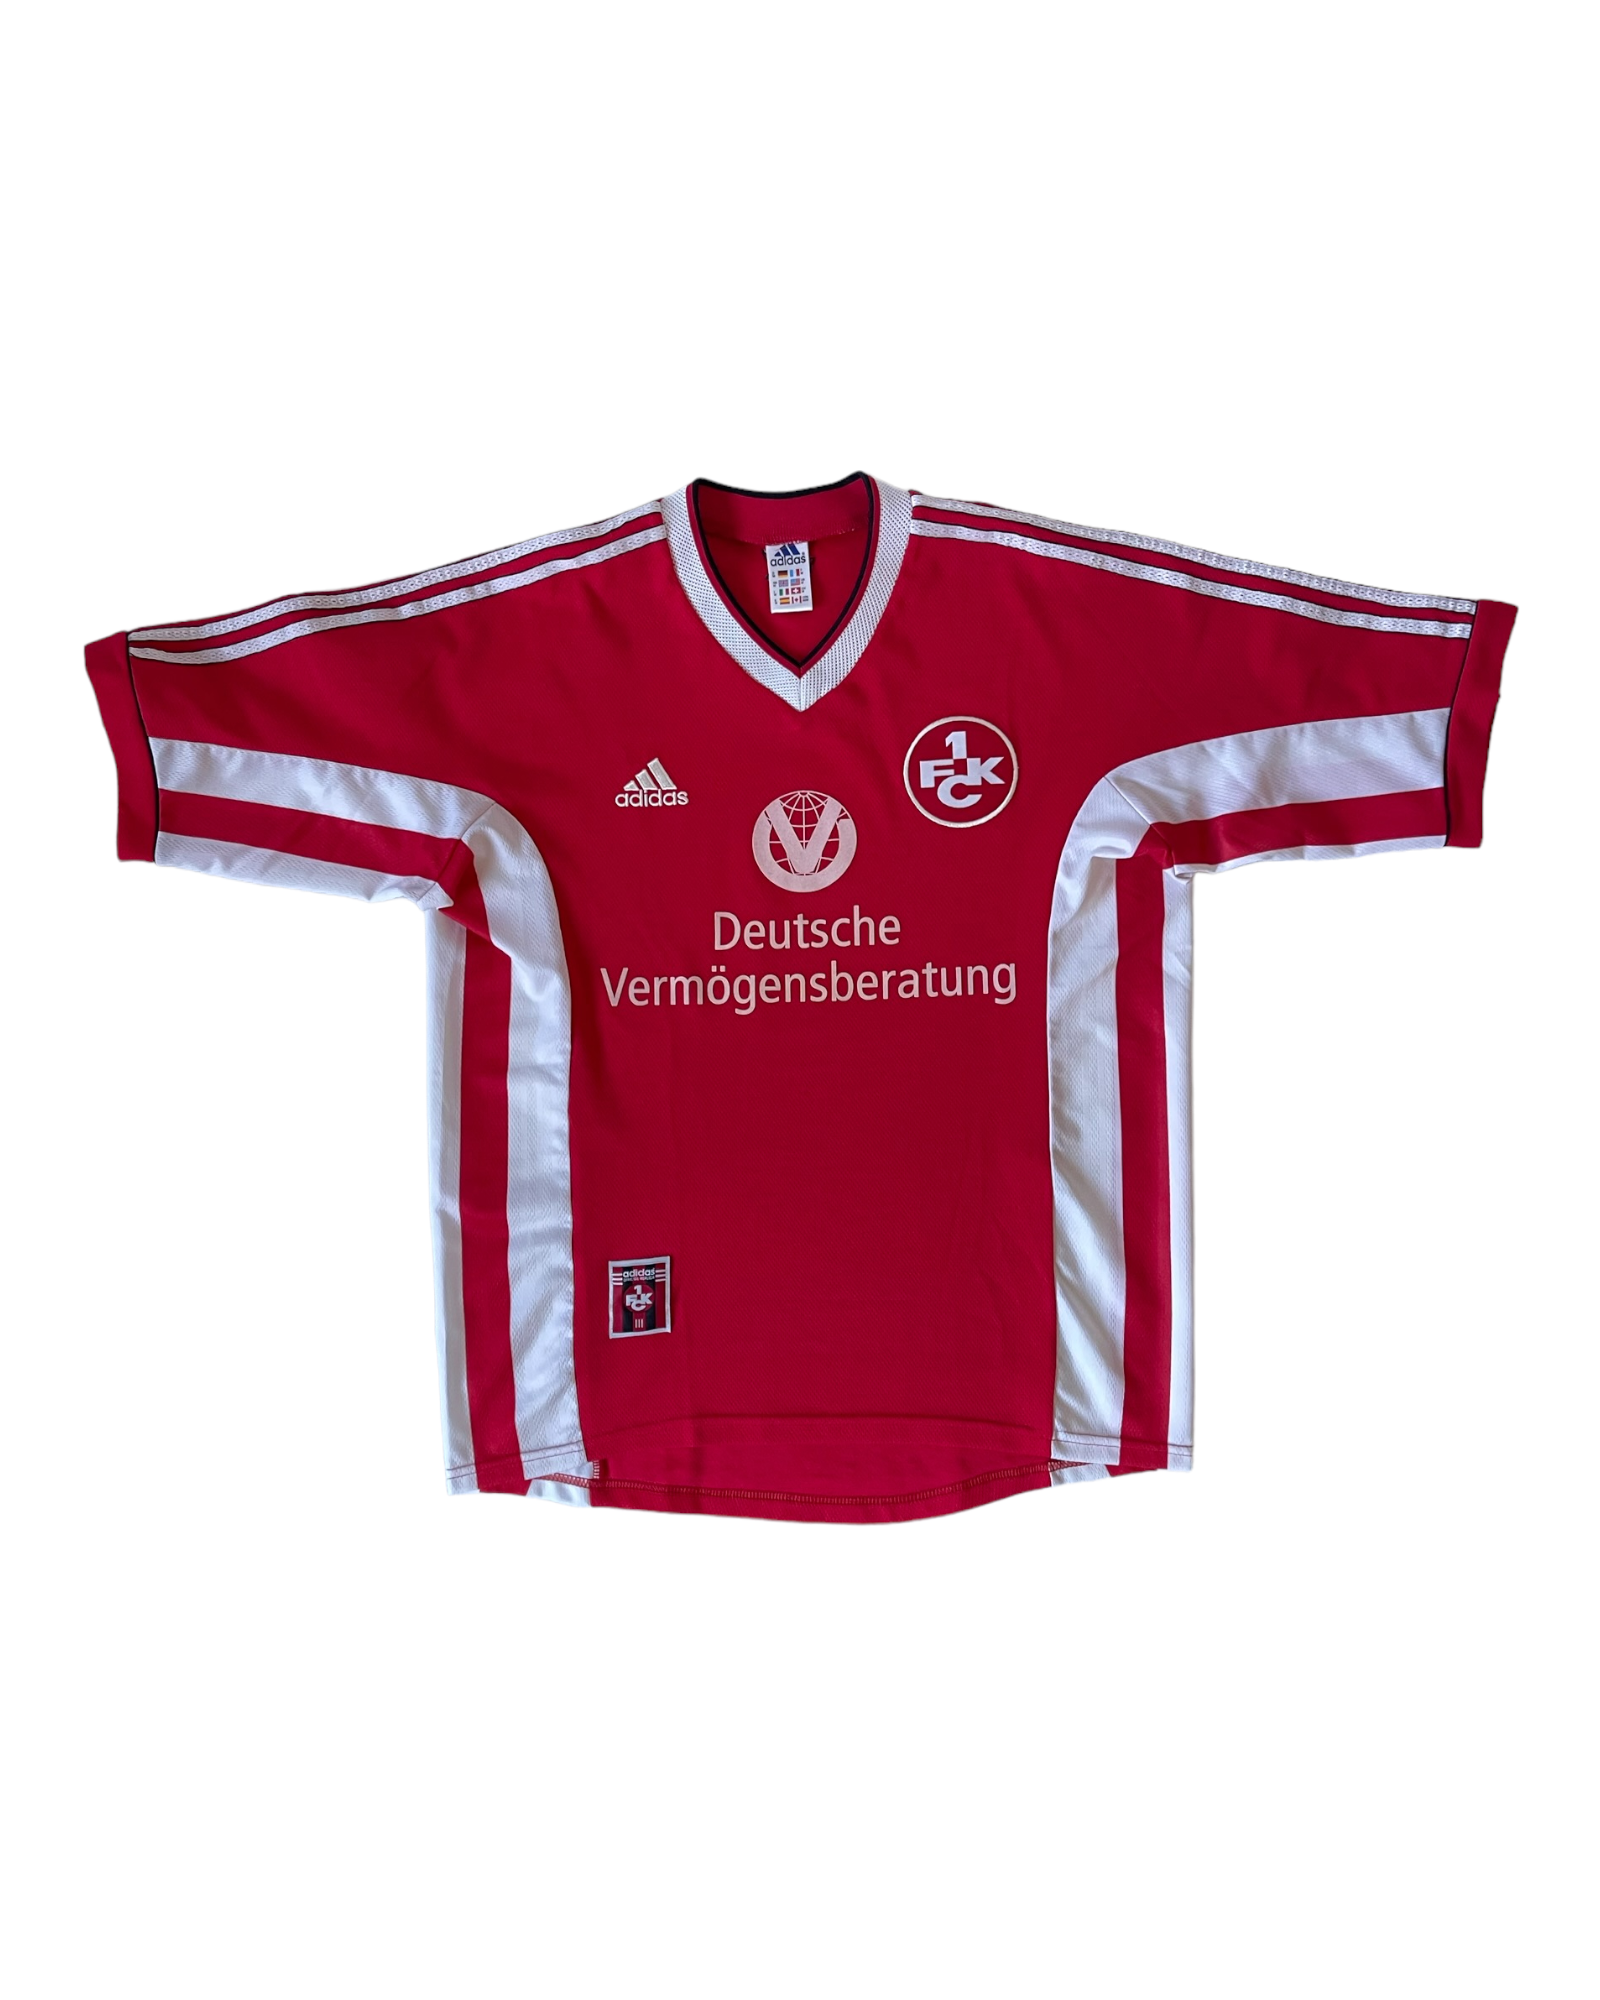 FCK Kaiserslautern Adidas 1998-1999 Home Football Shirt Red Size M Made in England